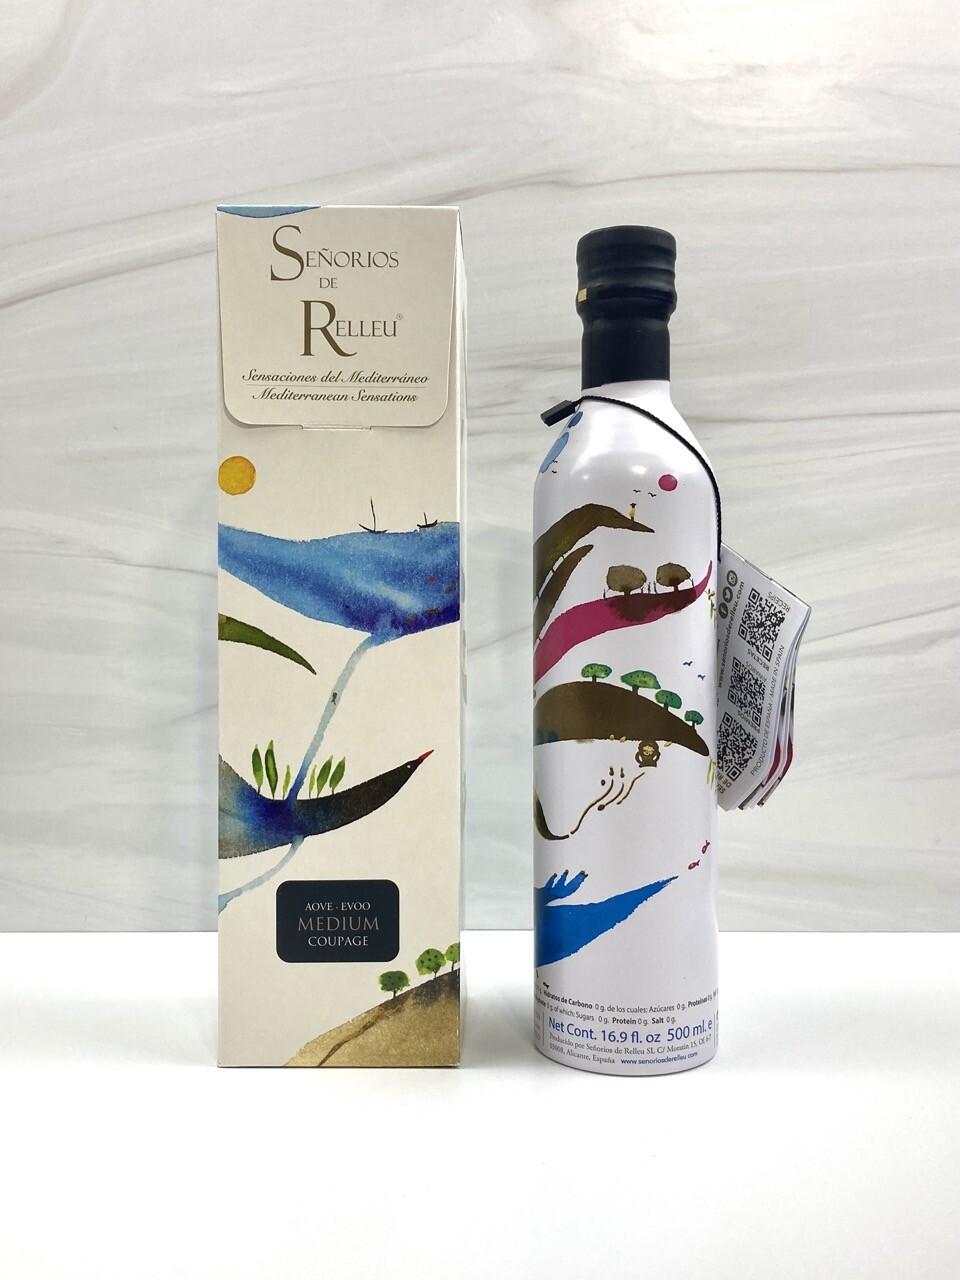 Señorios de Relleu: Extra Virgin Olive Oil (Medium Coupage) from Spain (500 ml)